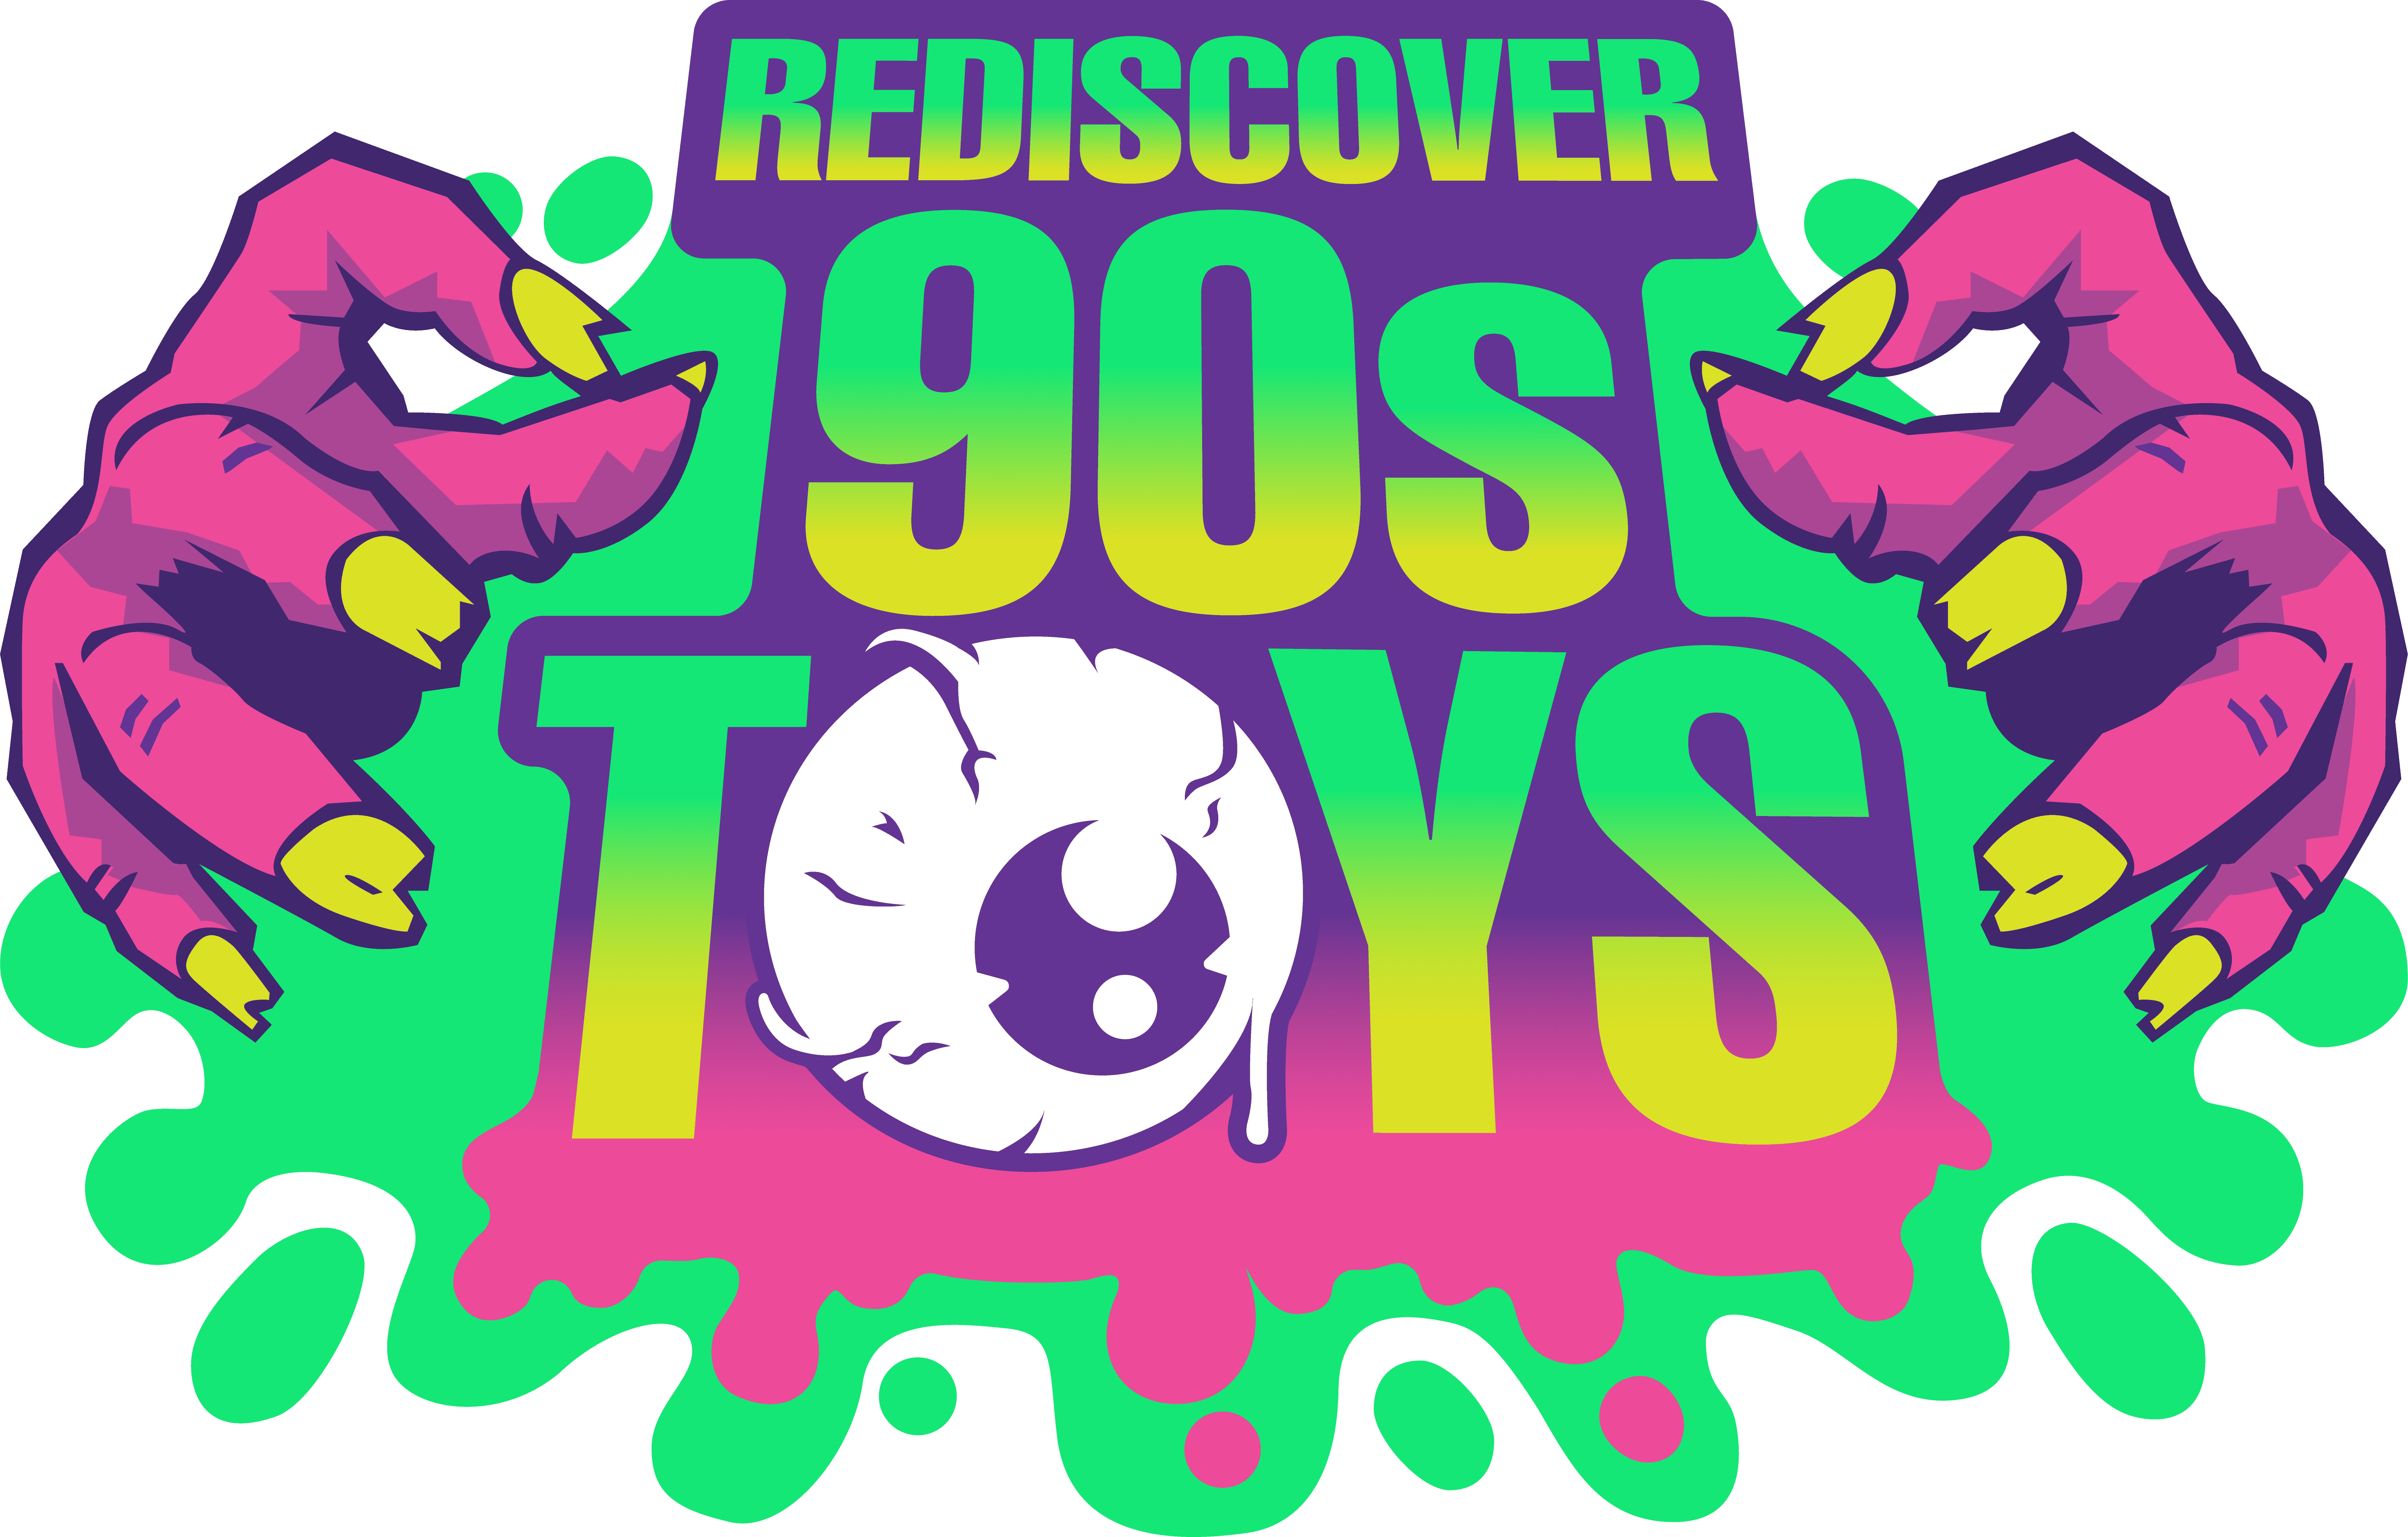 Rediscover 90s Toys Logo